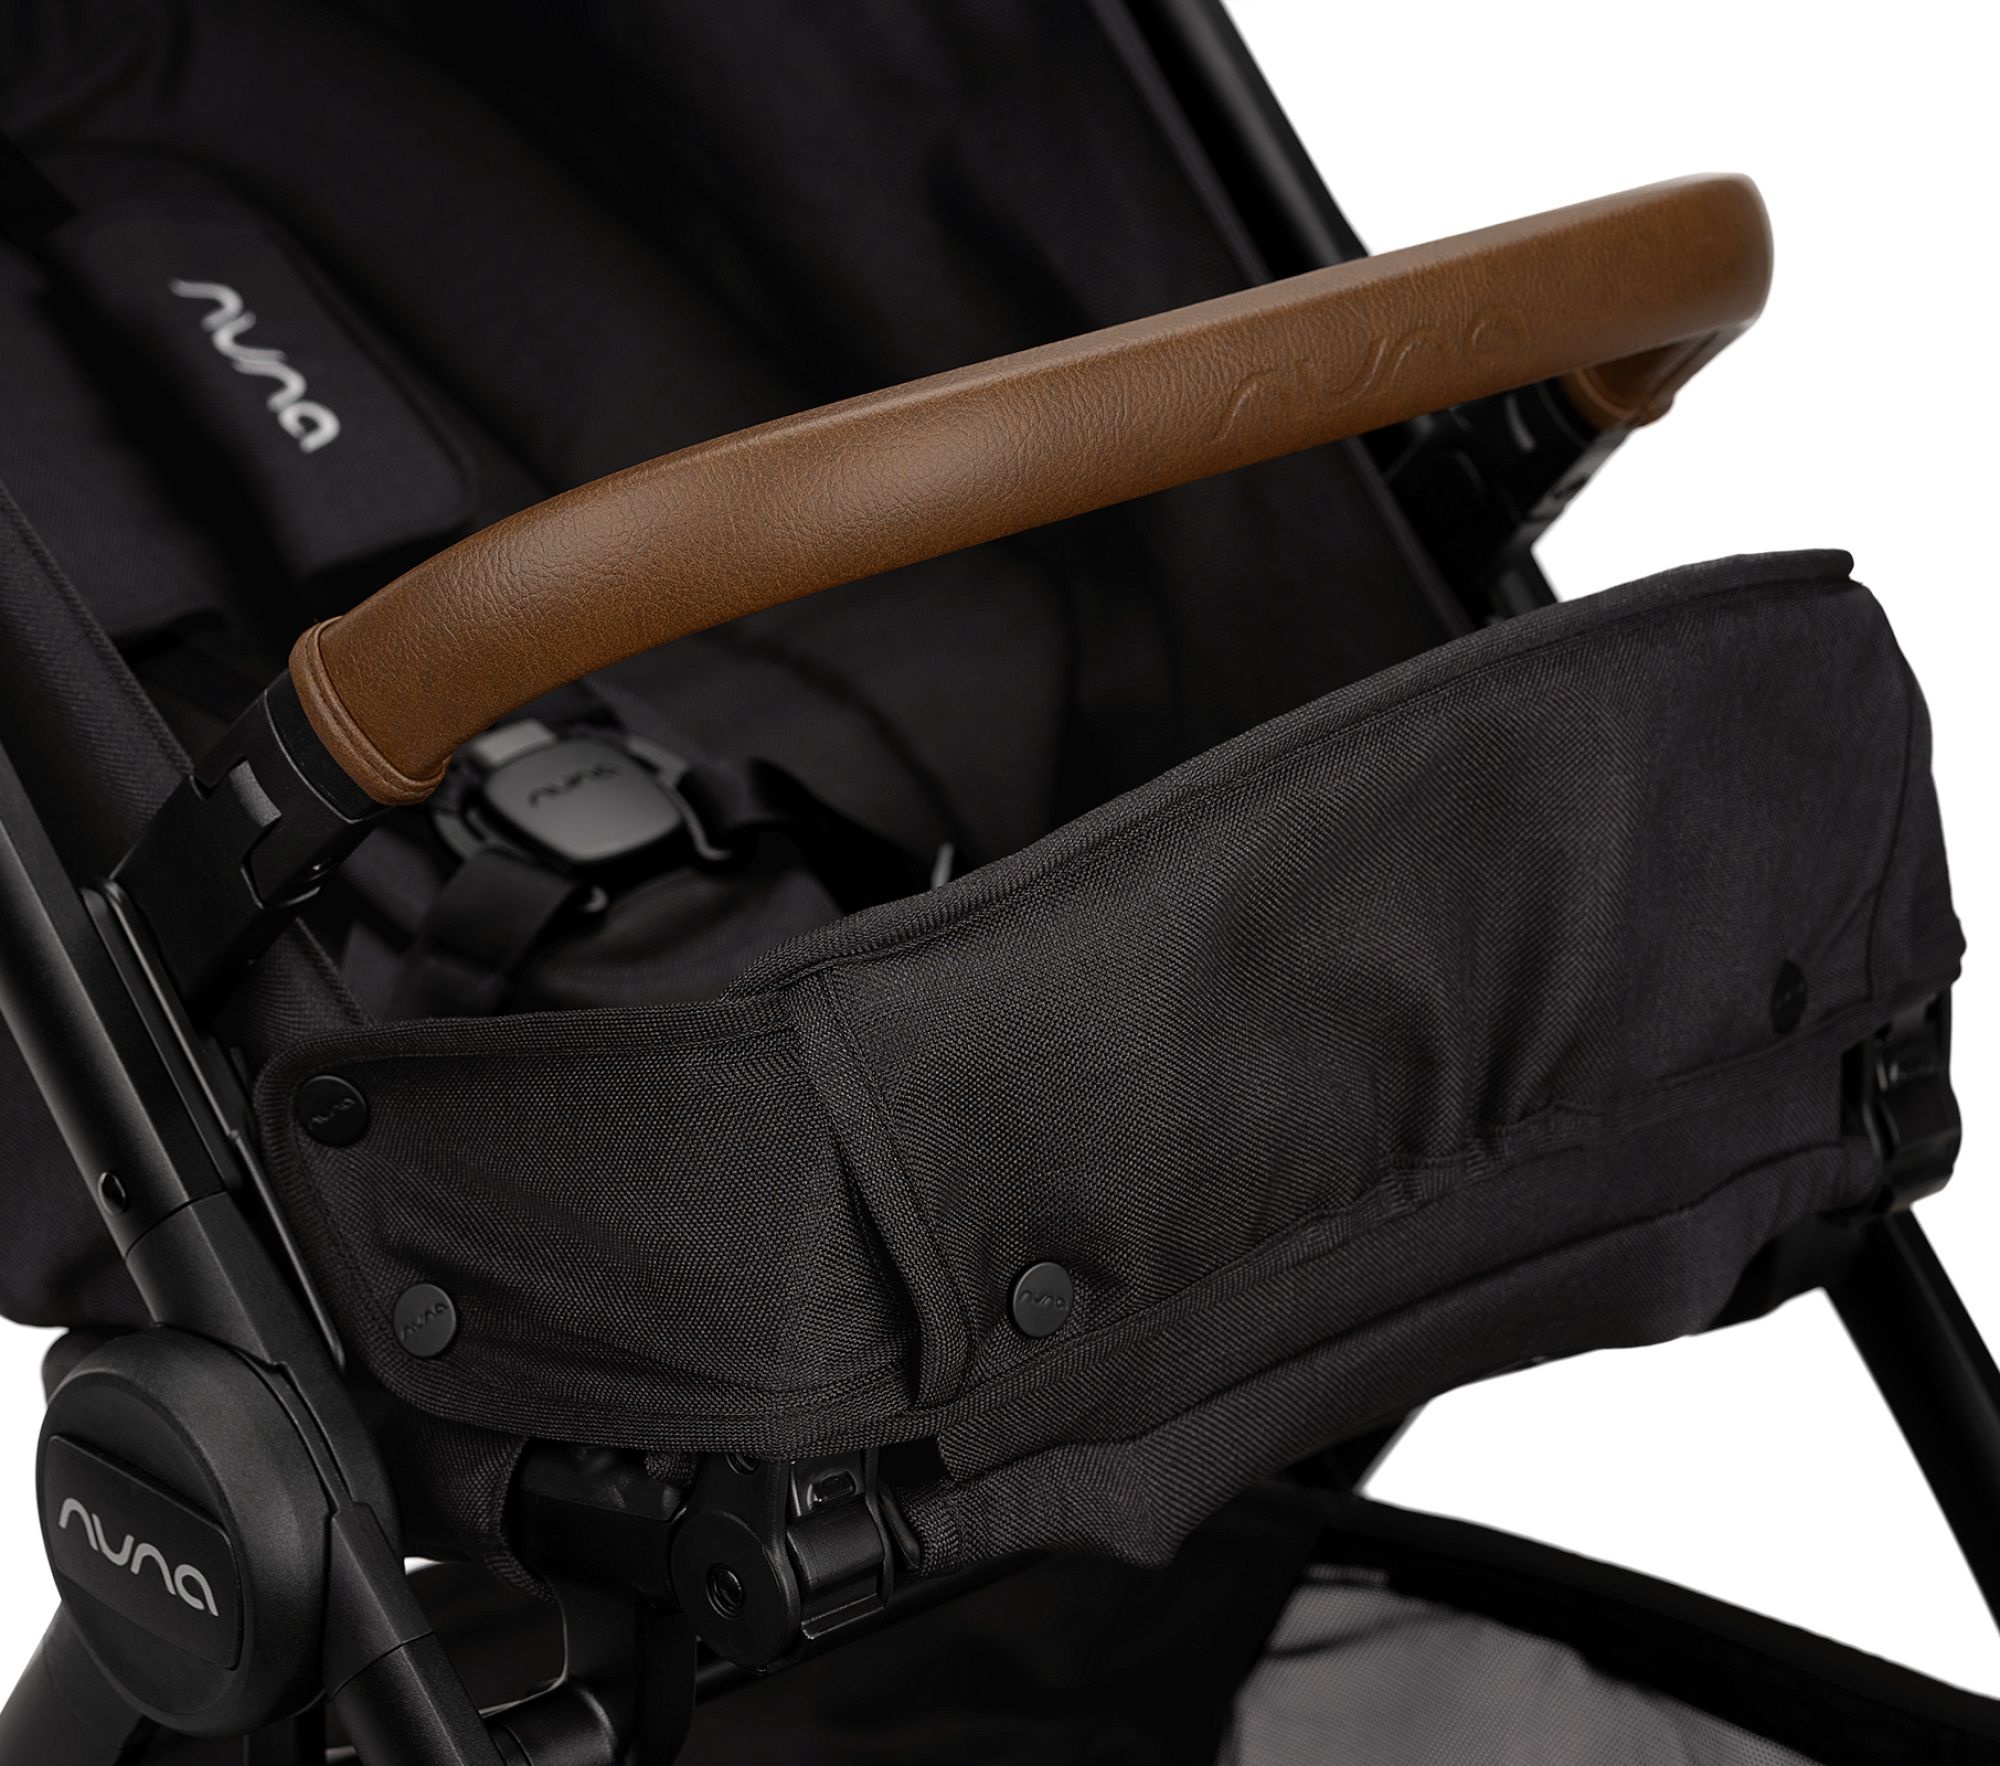 Nuna Nuna TRVL LX Stroller with Travel Bag | Preorder for Week of May 1